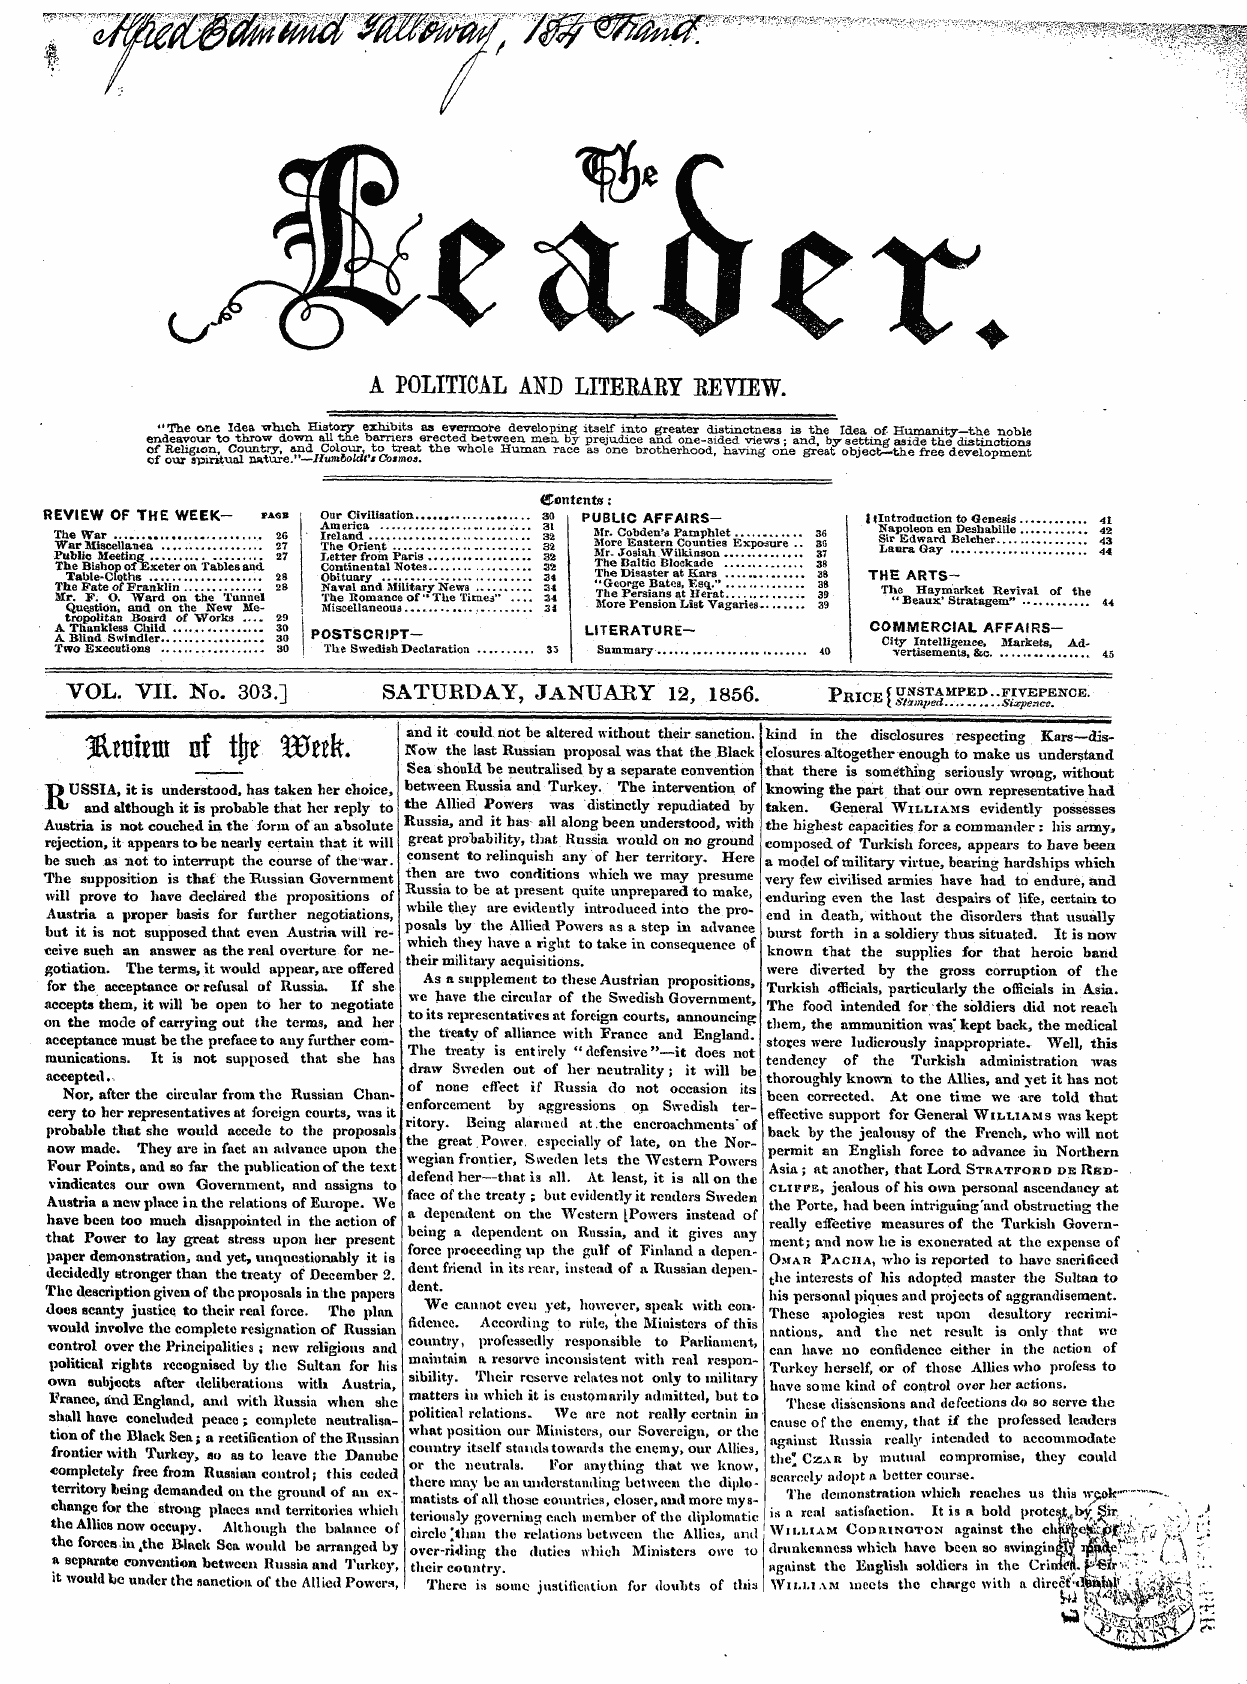 Leader (1850-1860): jS F Y, 2nd edition - Contents: ¦ Civilisation 30